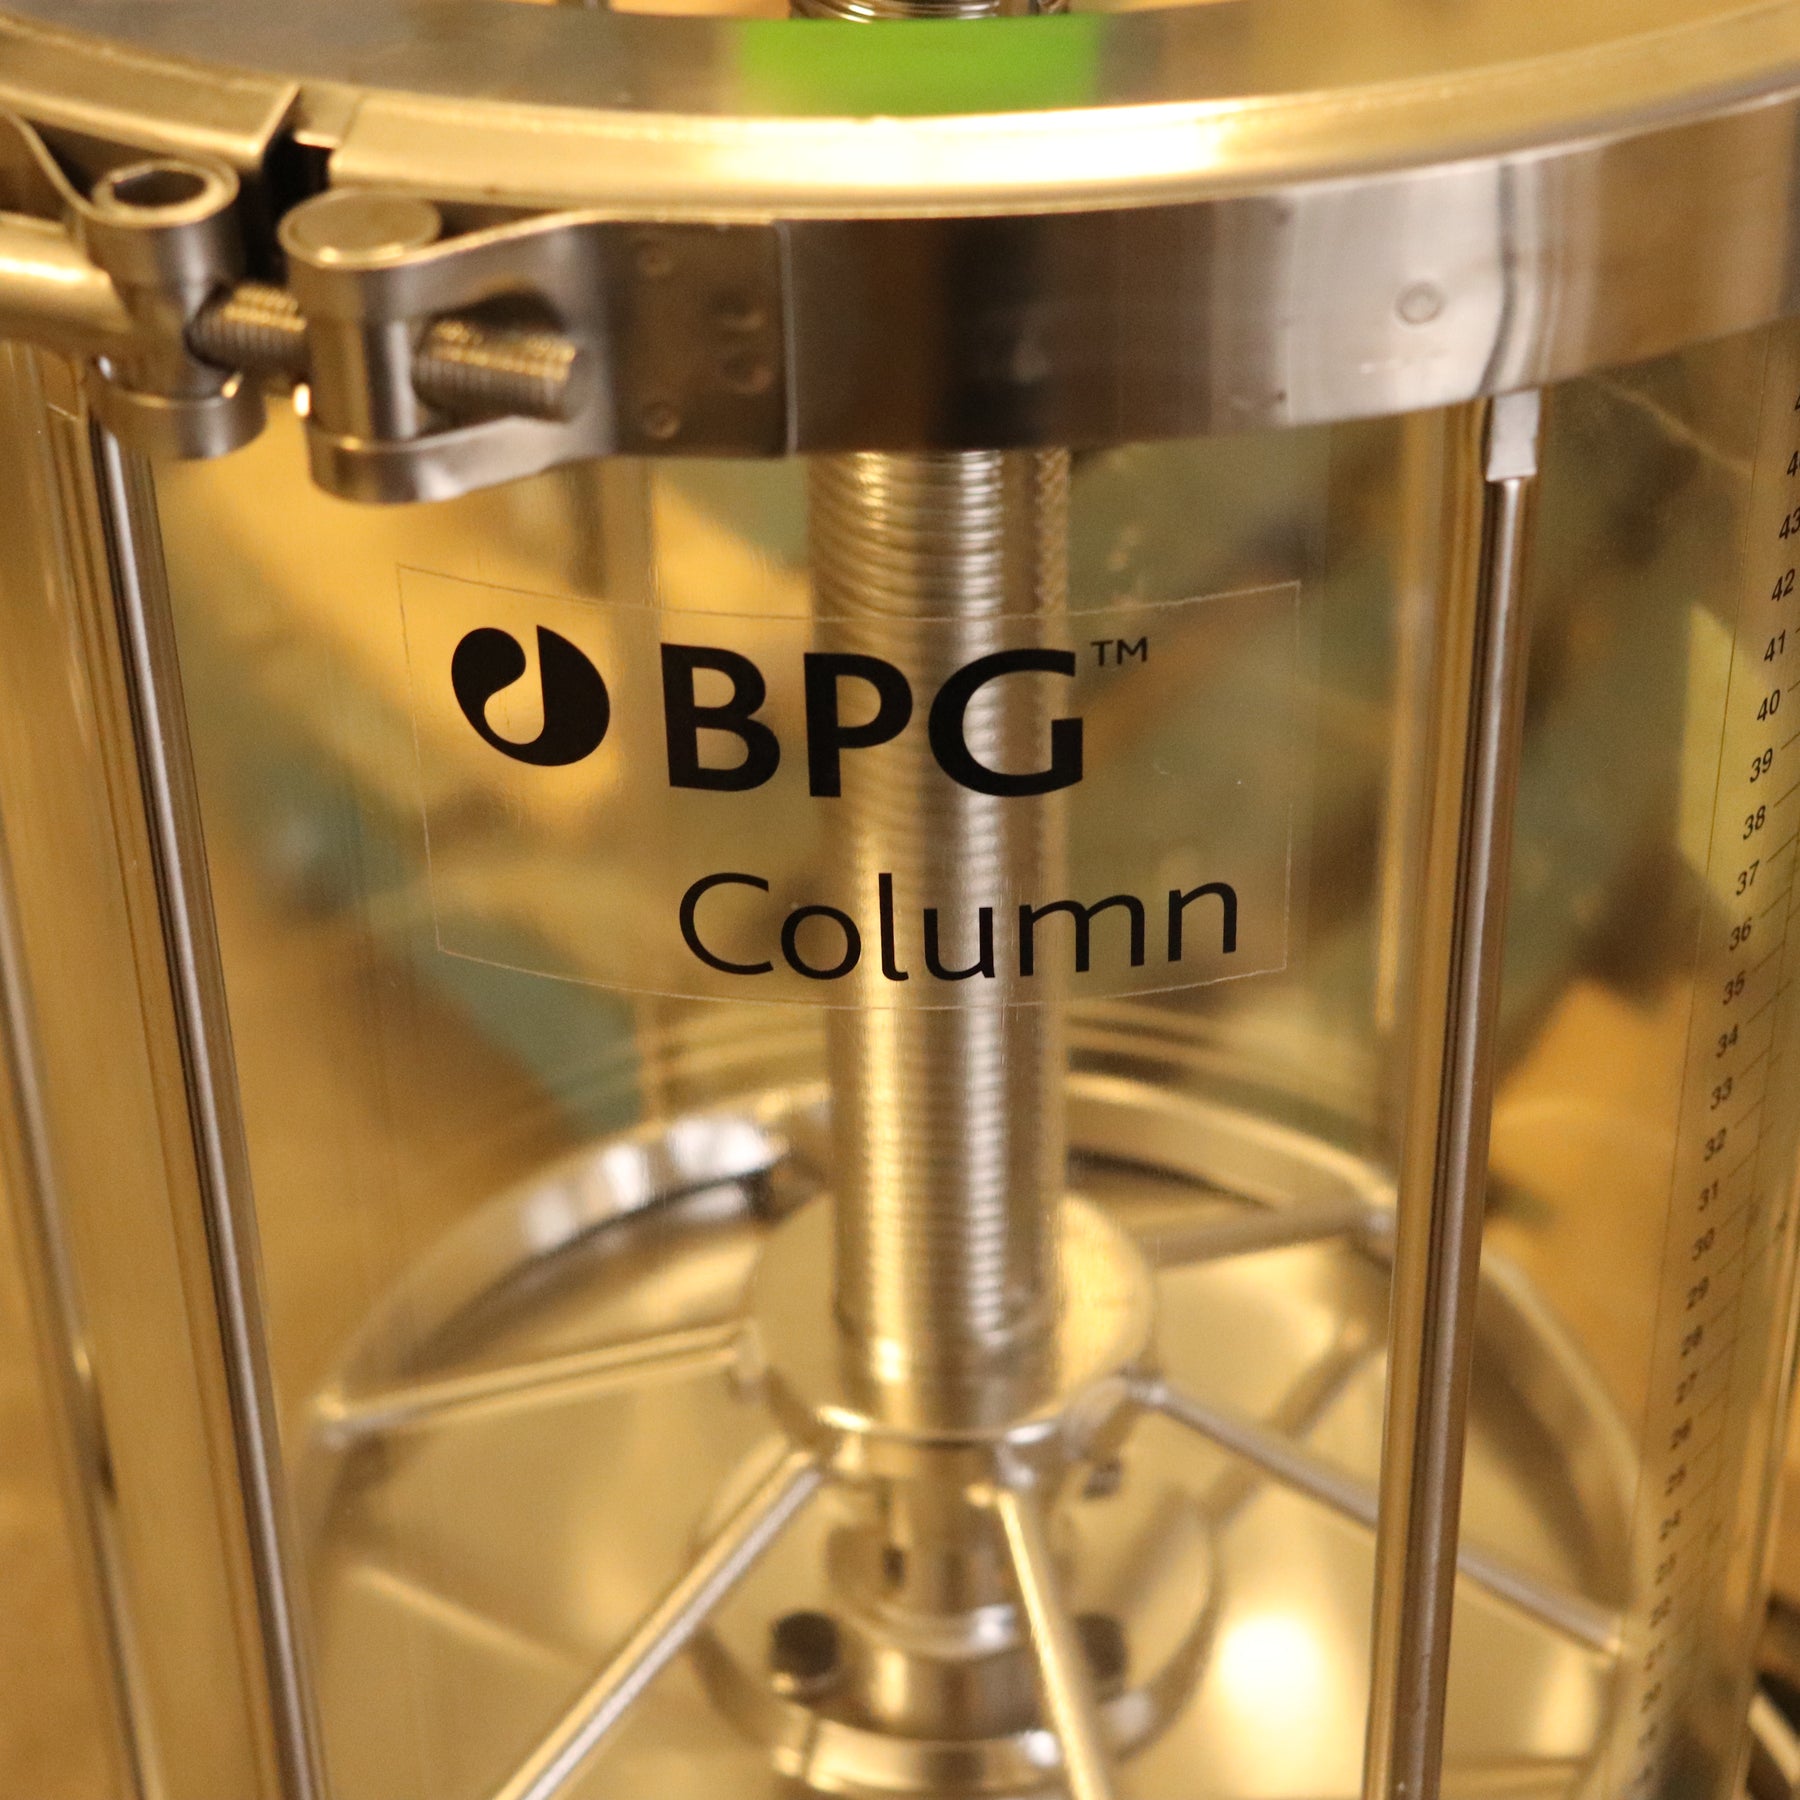 Cytiva GE BPG Glass Chromatography Column 34L 300/500